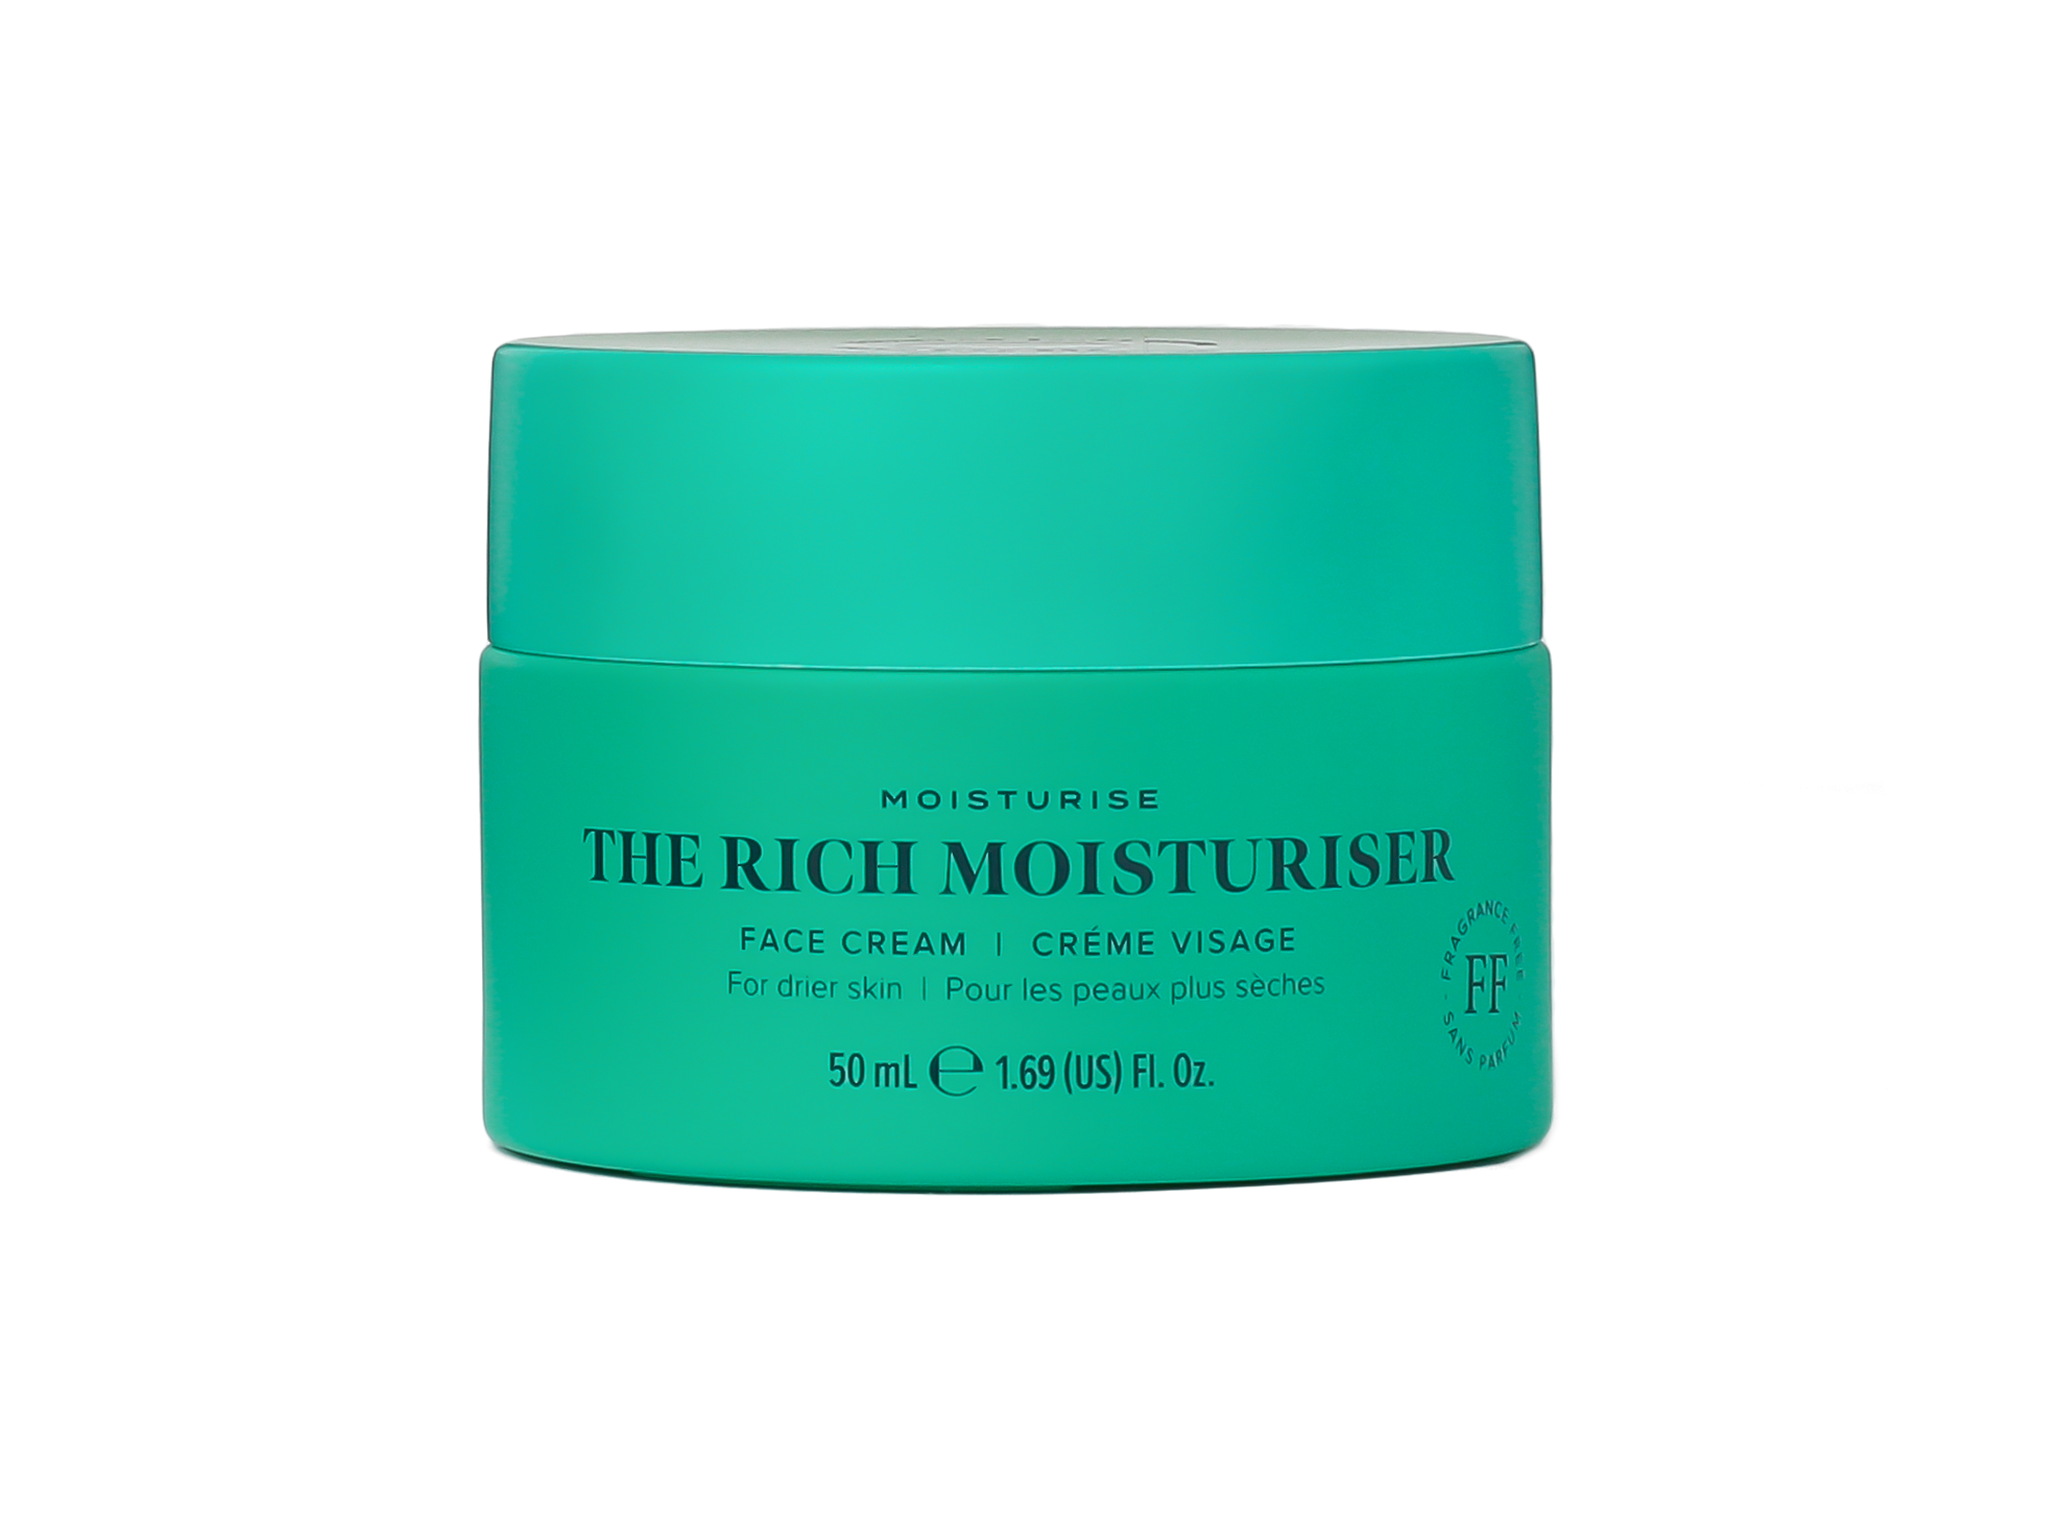 Skin Rocks the rich moisturiser review